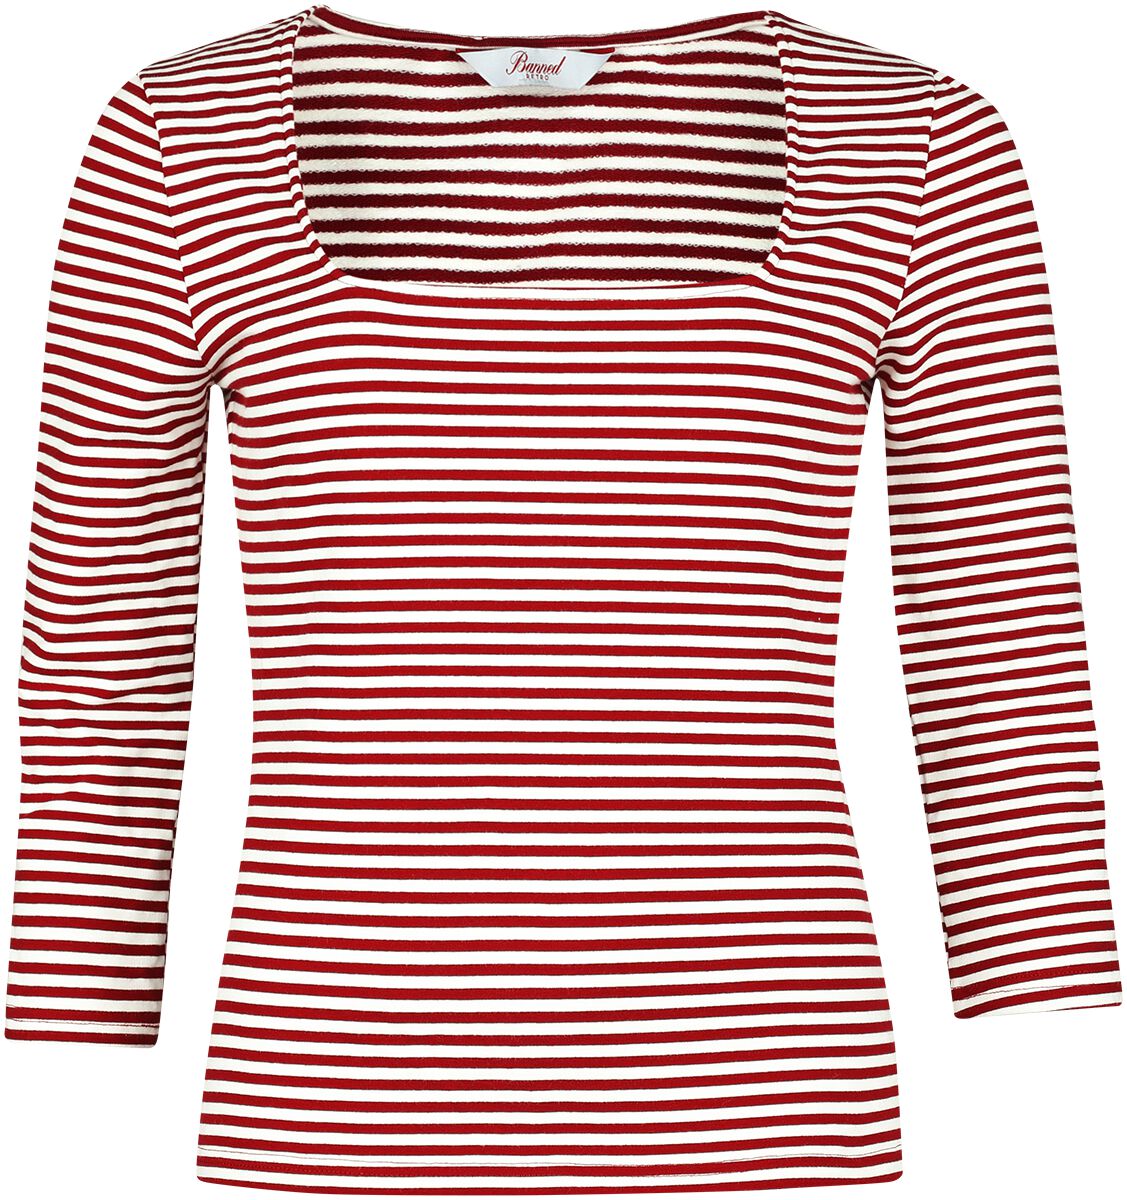 Banned Retro Stripe & Square Top Langarmshirt rot weiß in 4XL